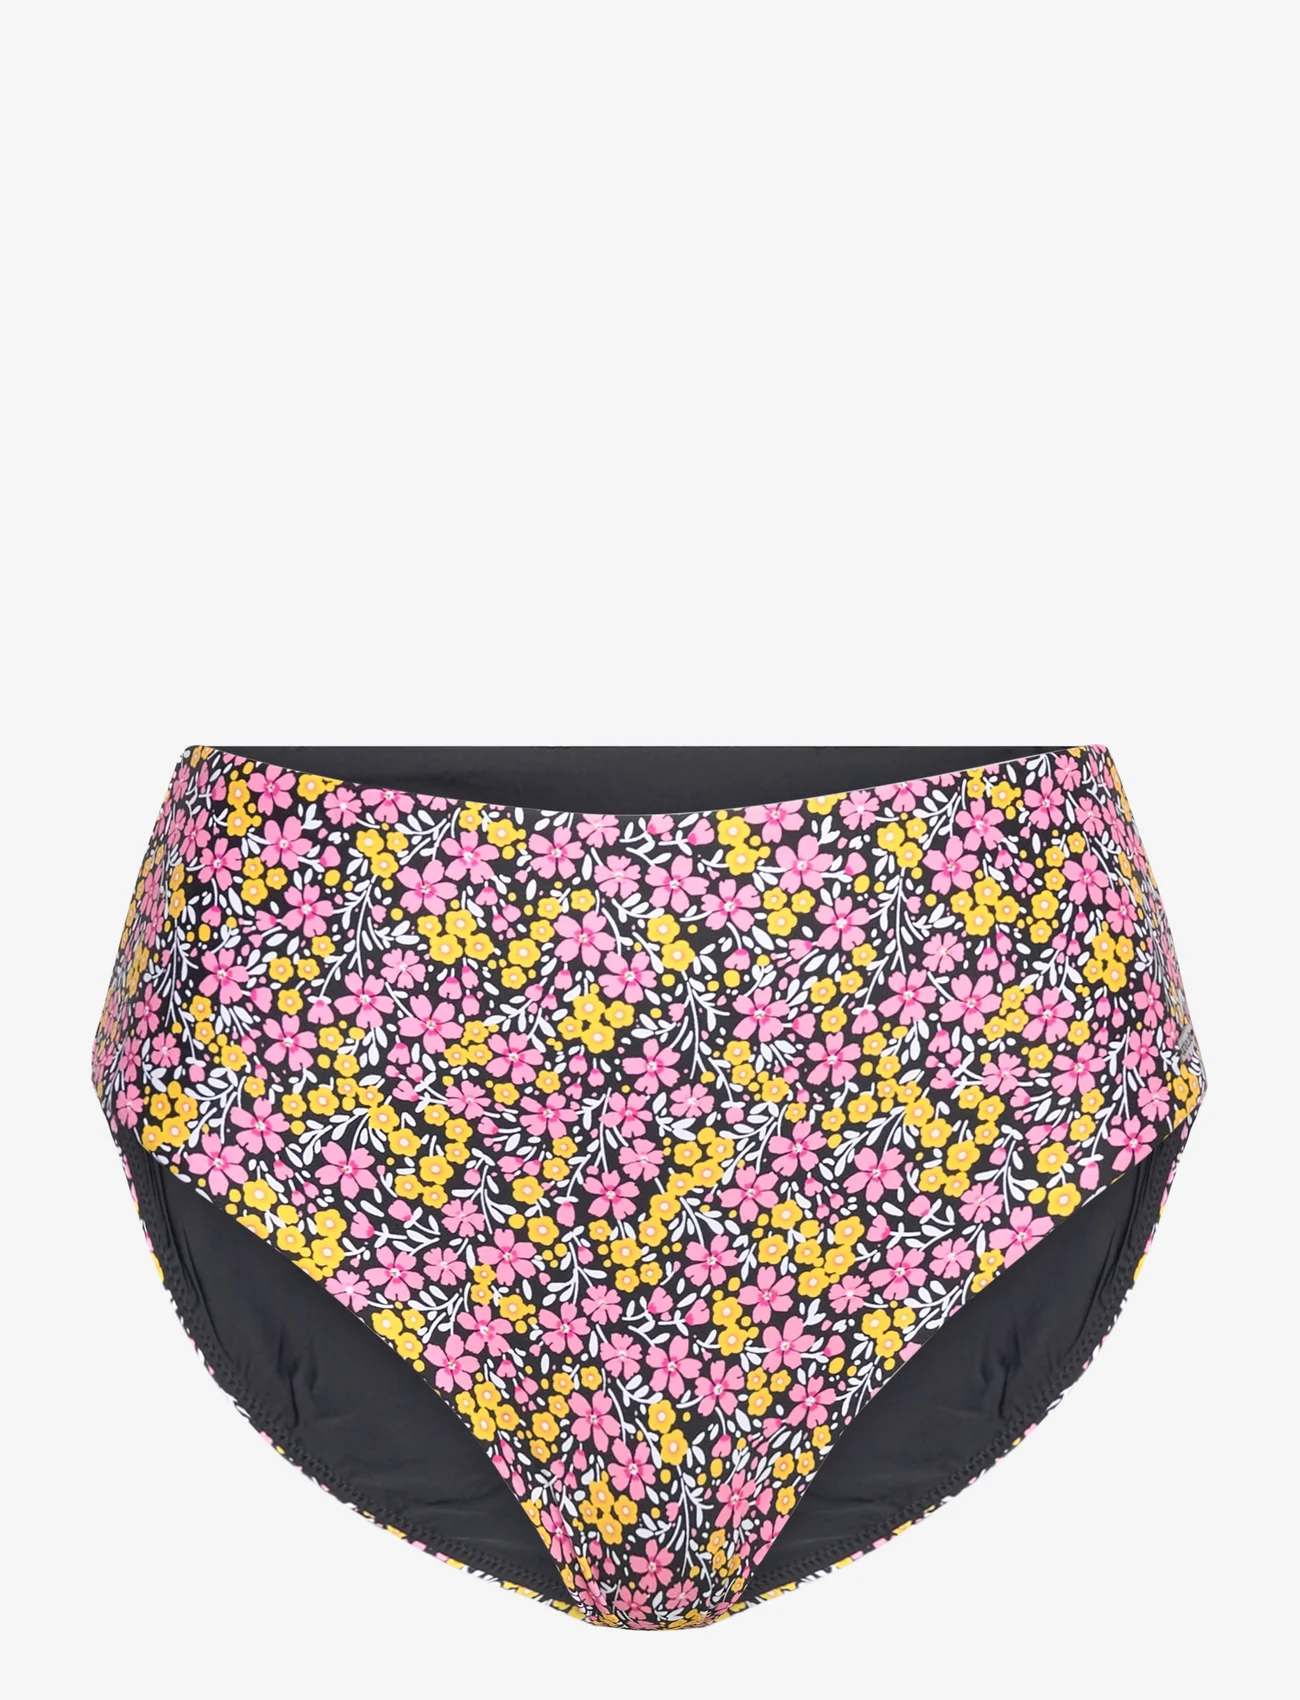 Abecita - Maui Maxi Brief, Flower - high waist bikini bottoms - black flowerprint - 0